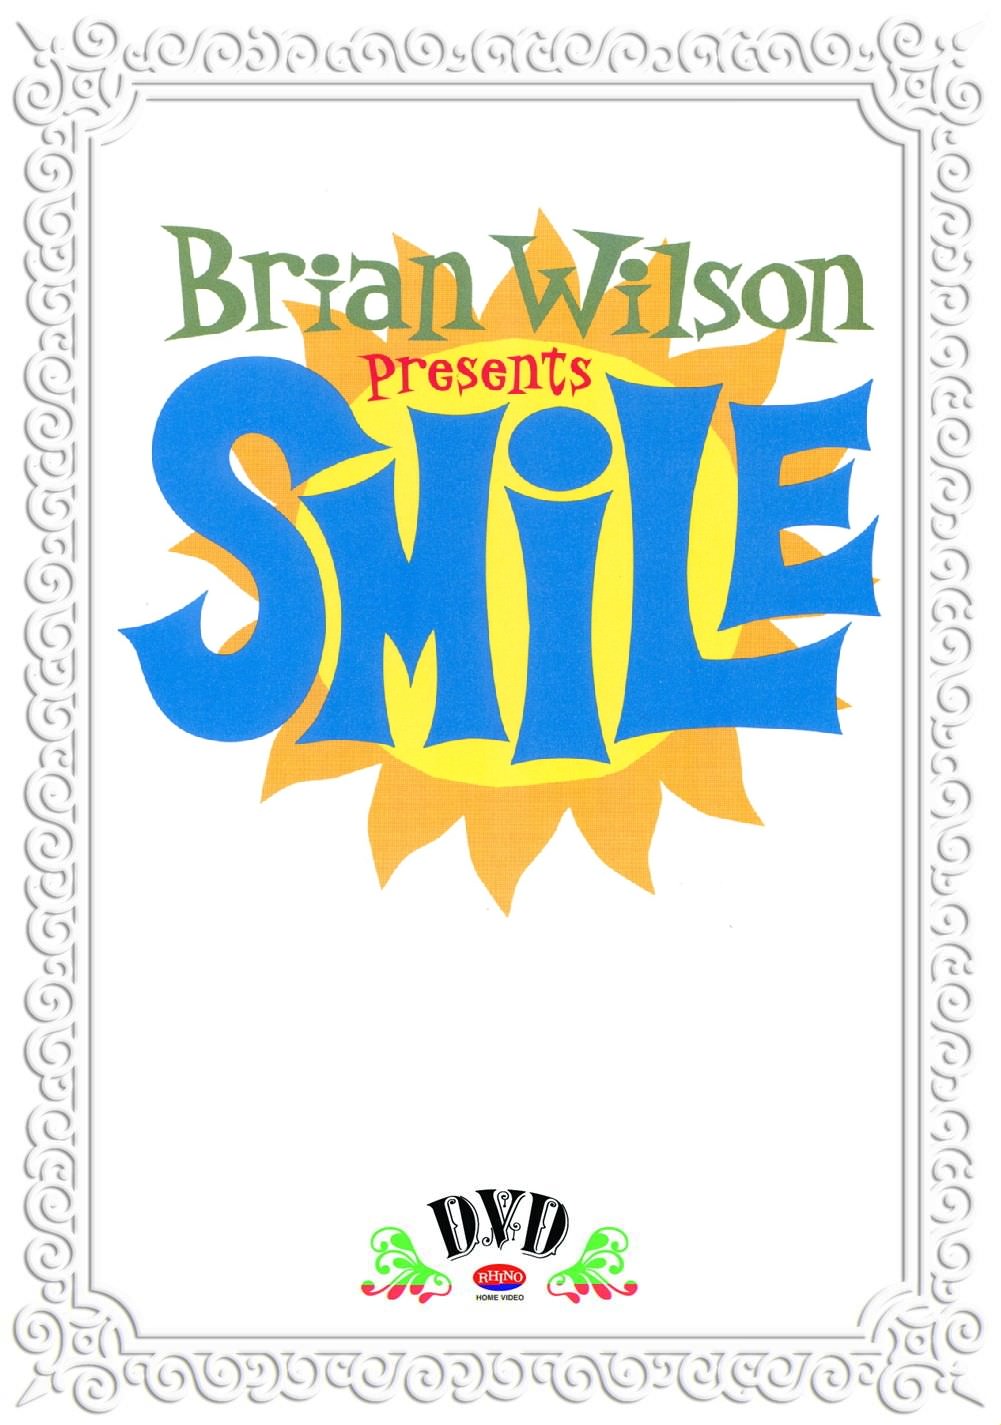 Brian Wilson Presents SMiLE cover